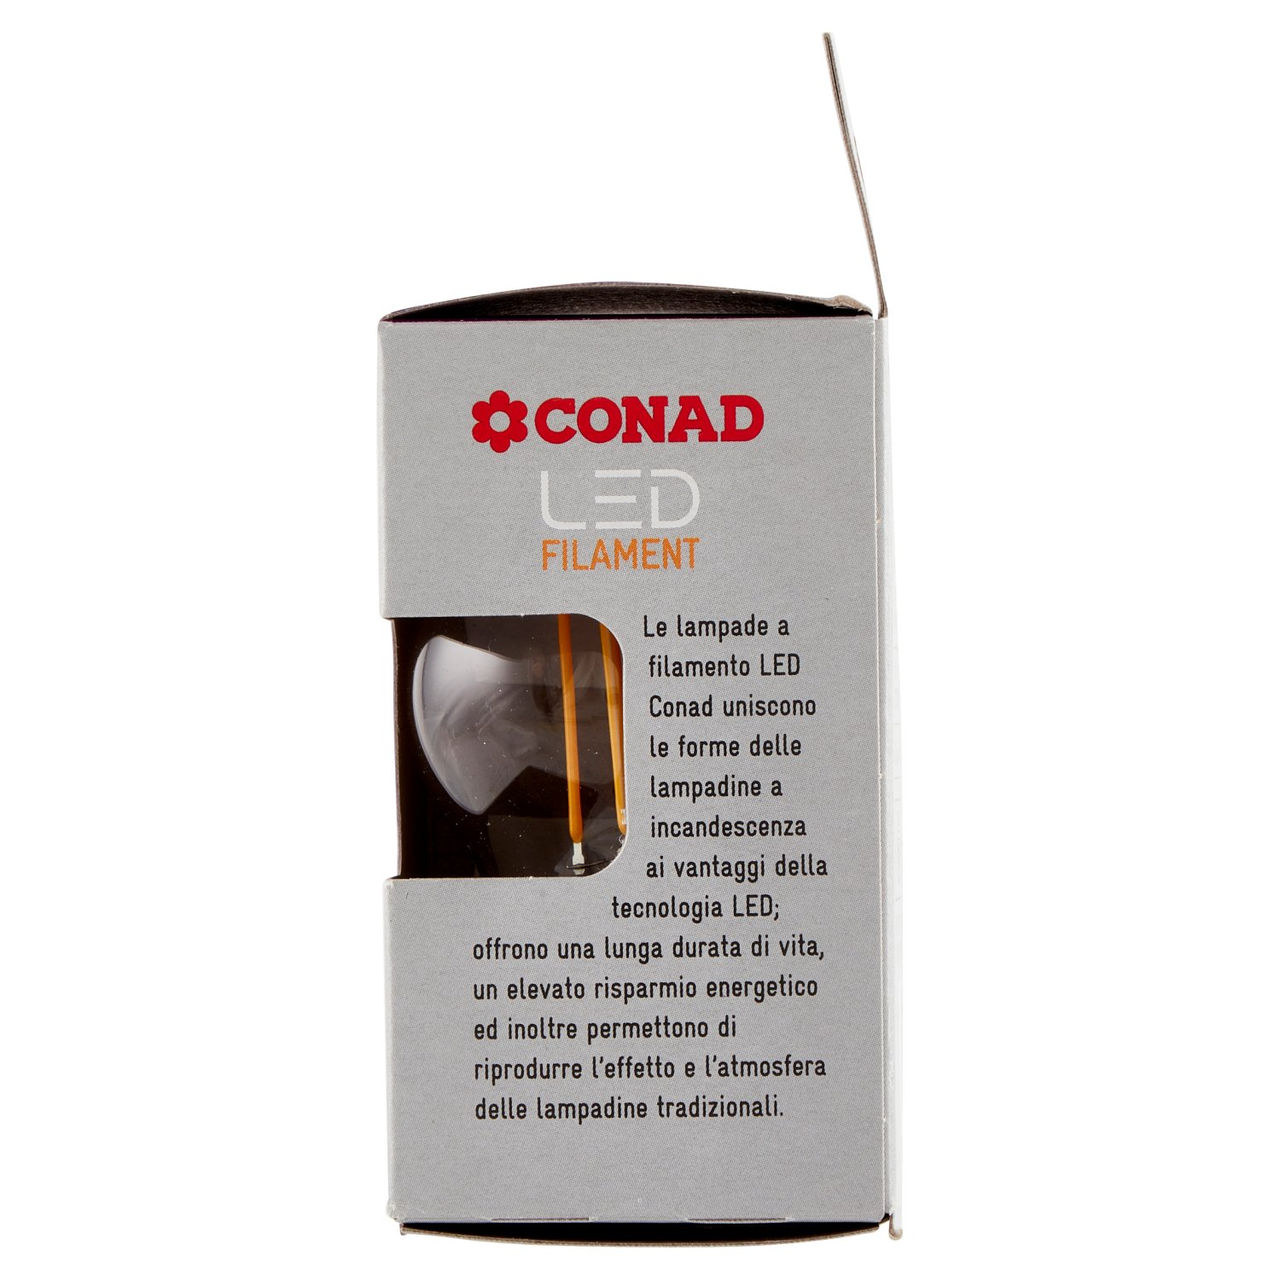 CONAD Led Filament 4.3W 470 Lumen E27 Luce Calda